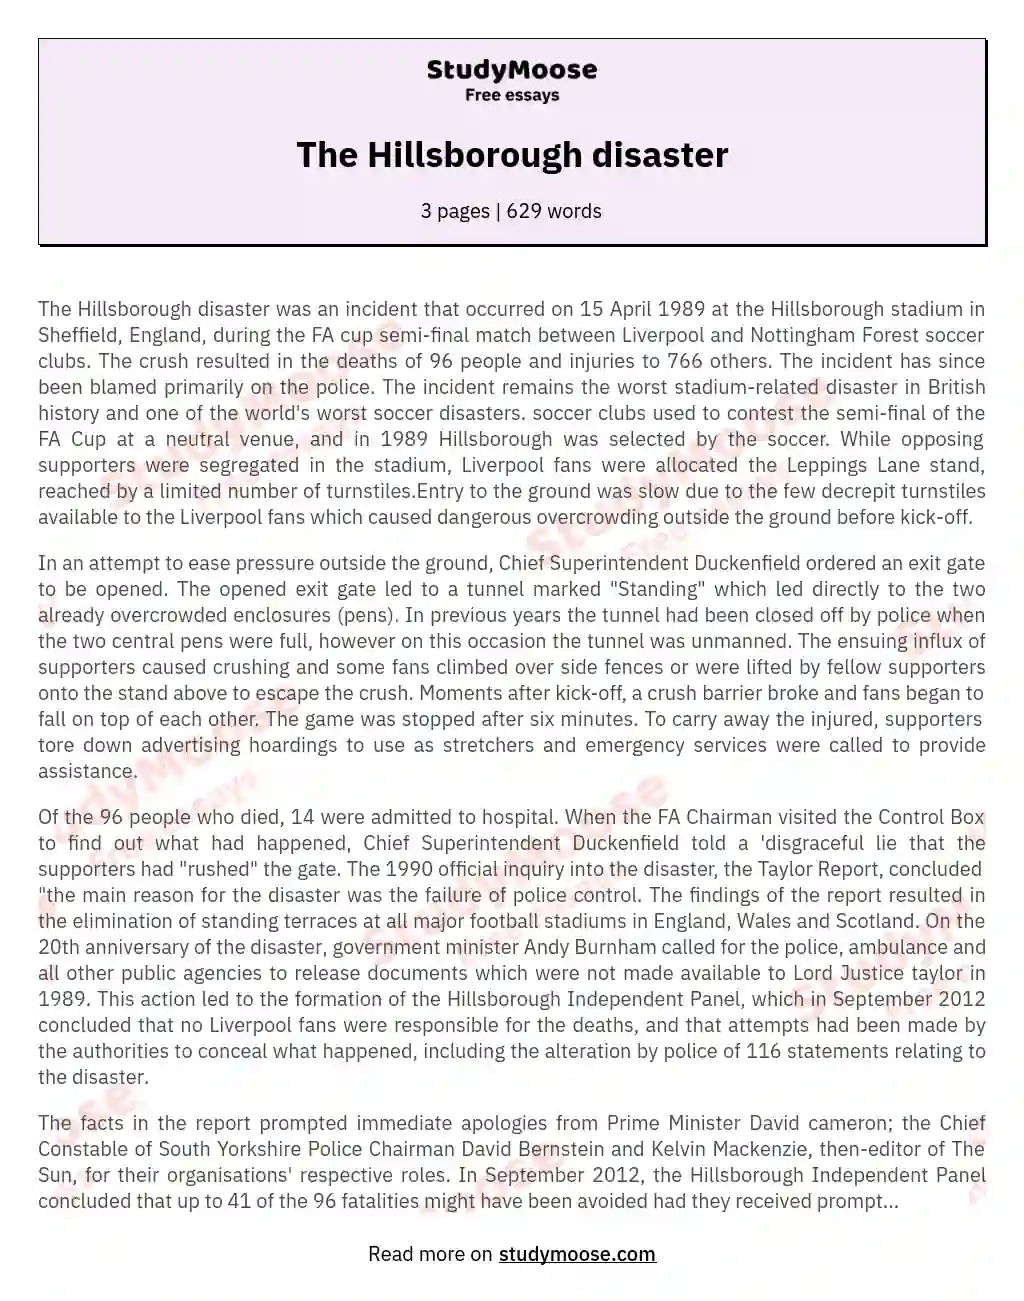 The Hillsborough Disaster: A Tragic Reminder of Negligence essay